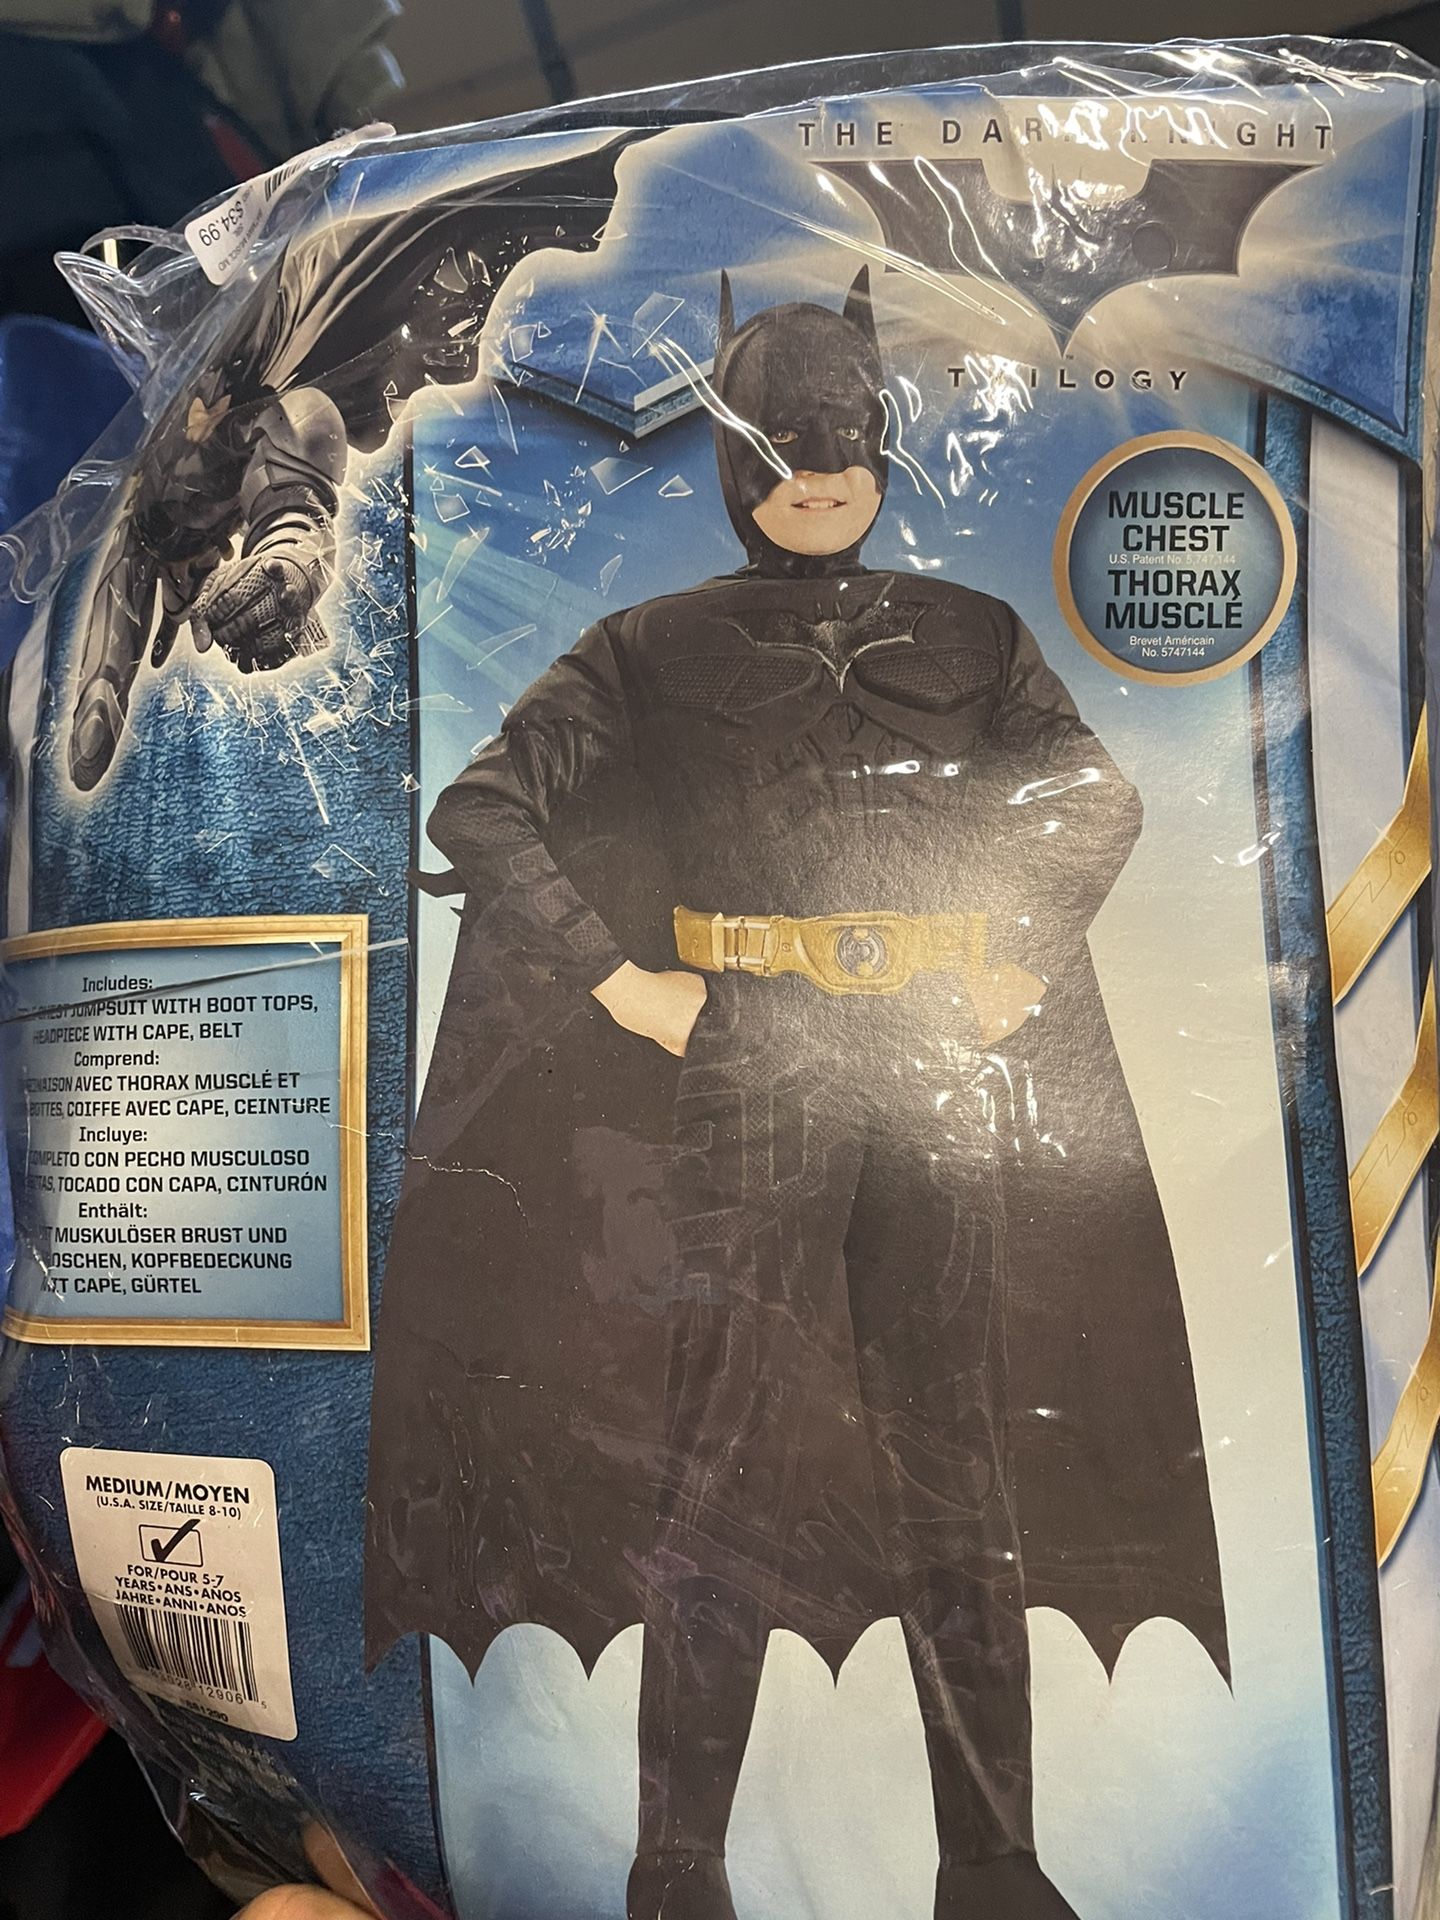 Batman Kids Costume 